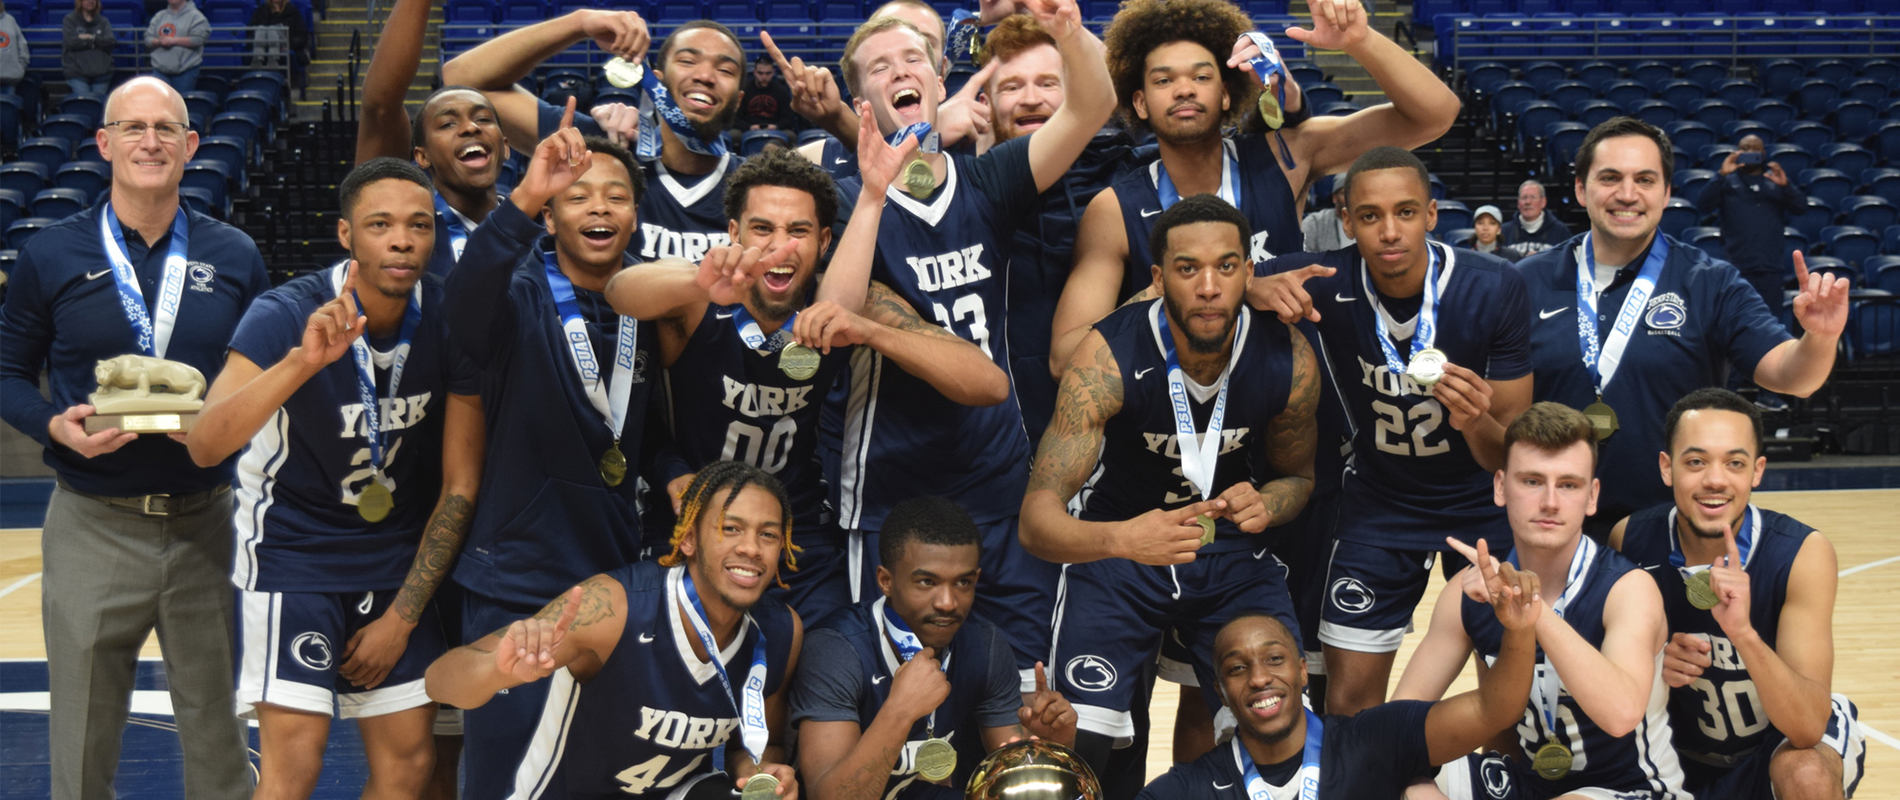 Penn State York men's basketball won the 2019 PSUAC Championship.